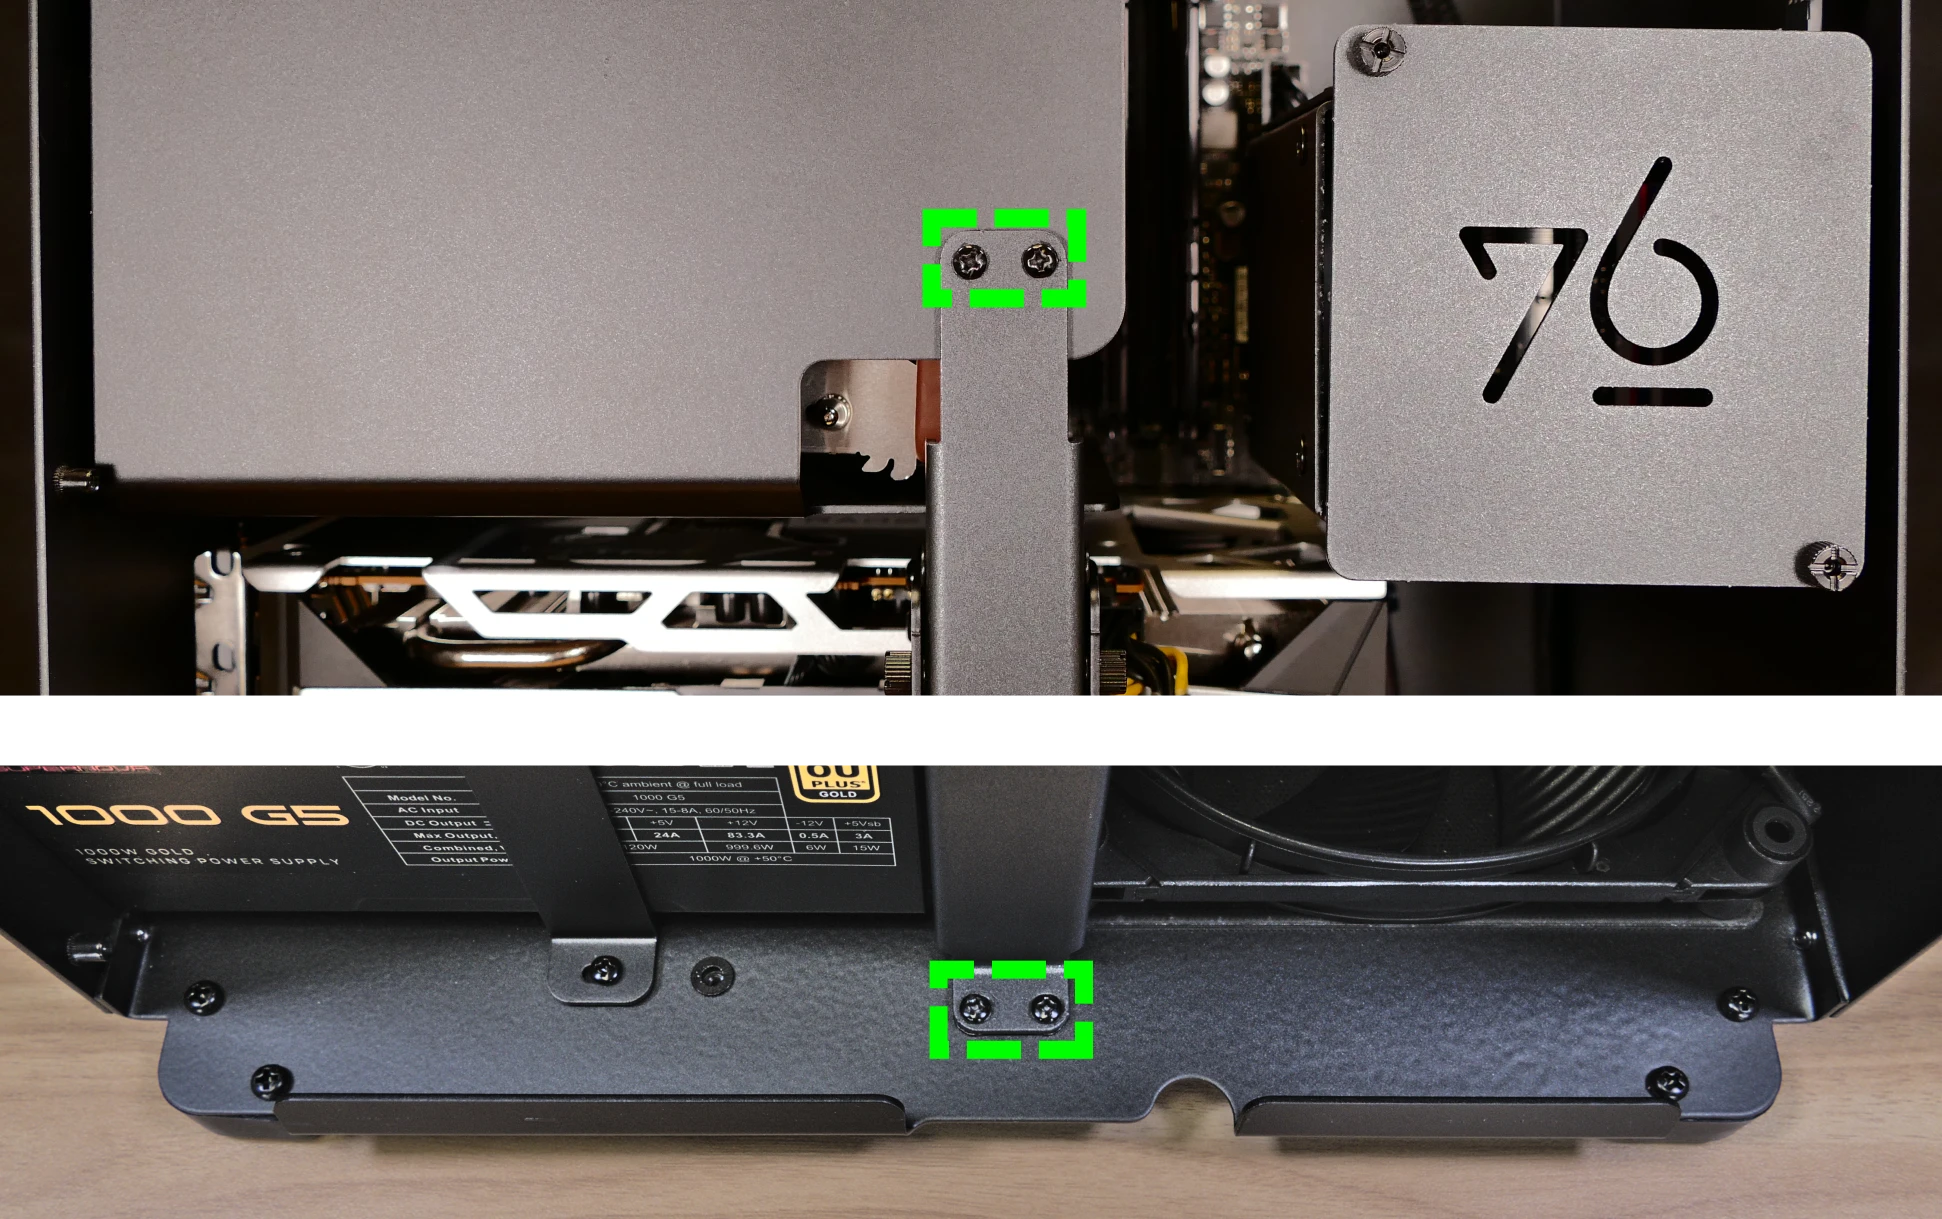 GPU brace screws